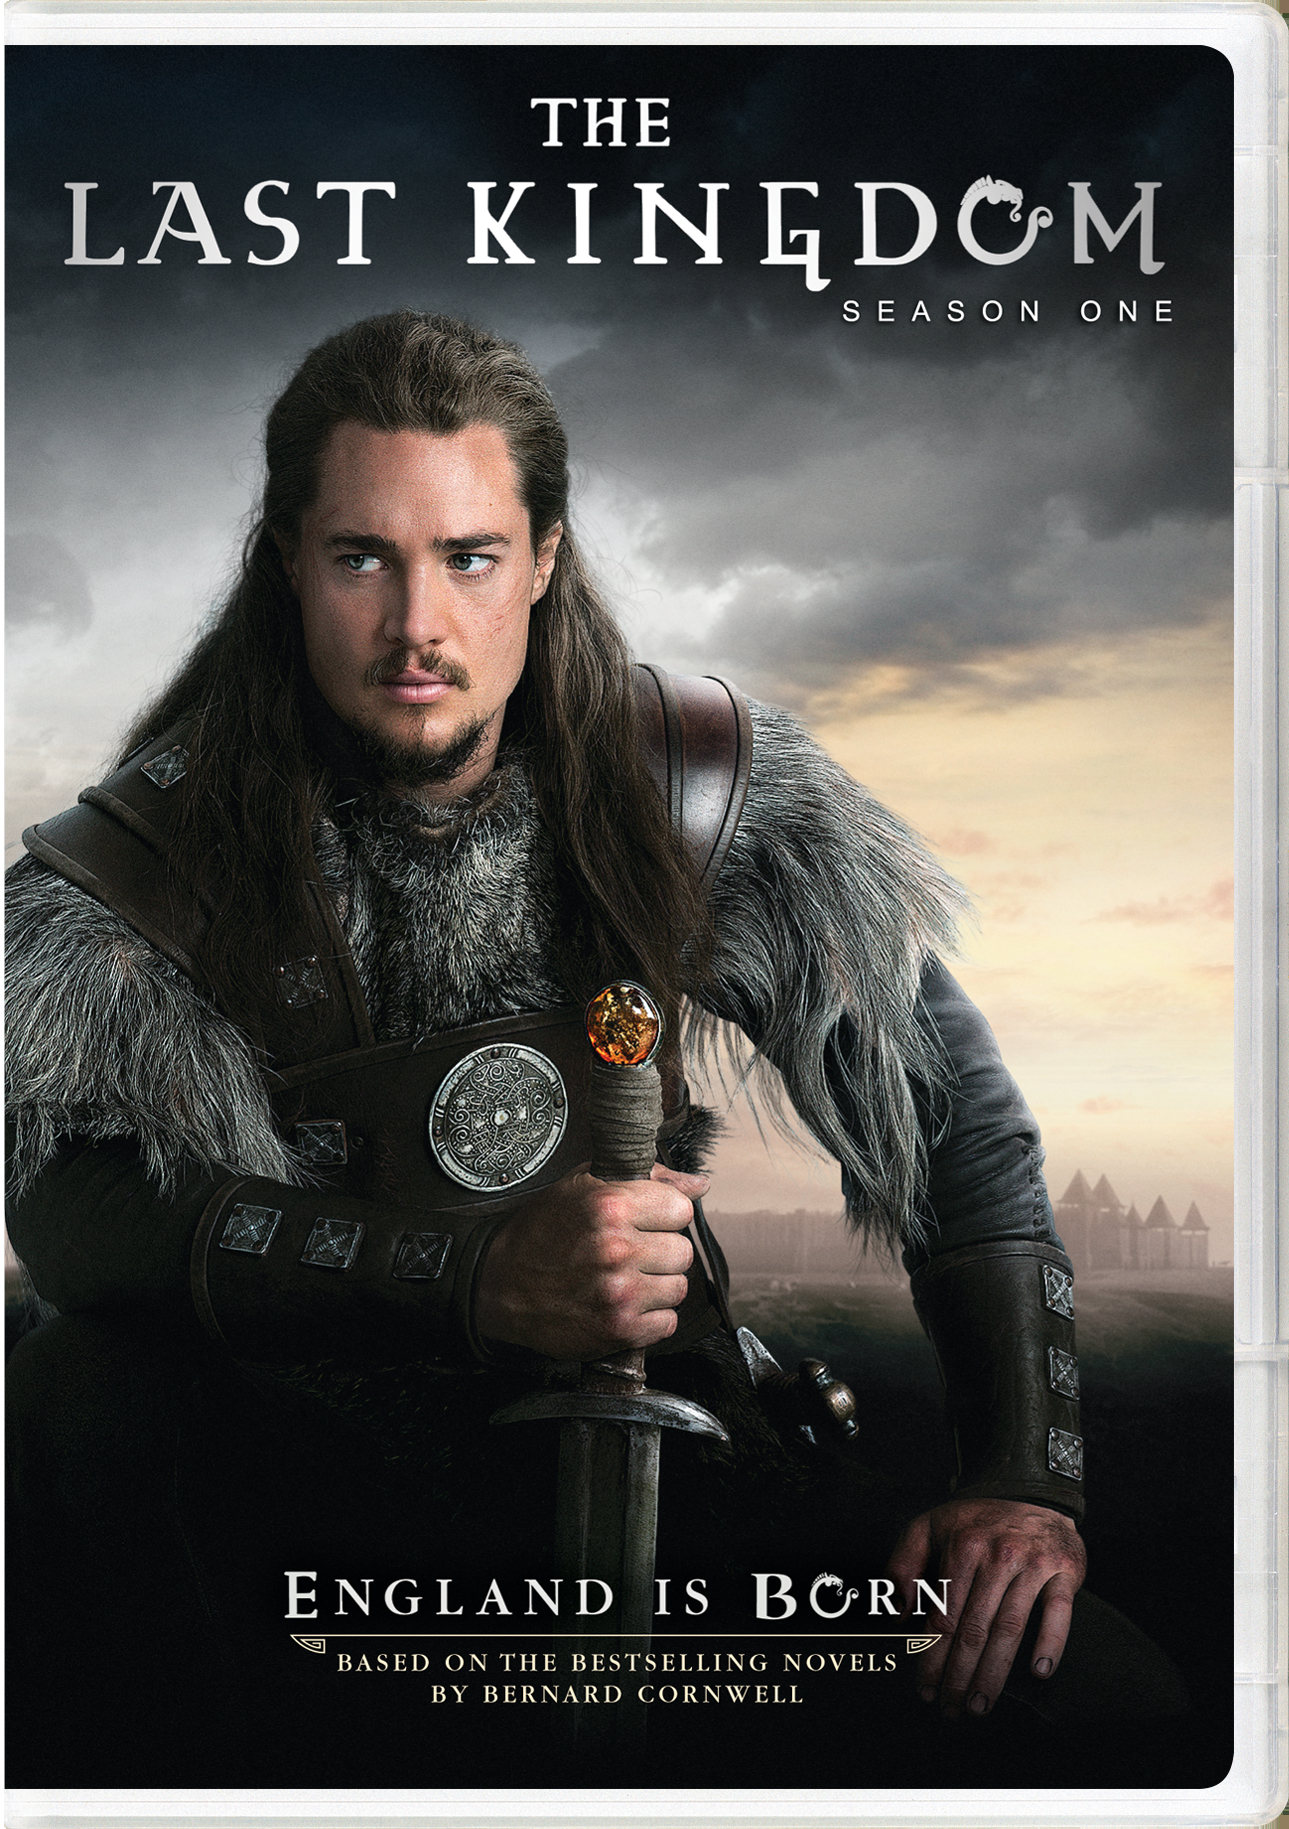 The Last Kingdom: Season One - DVD [ 2015 ]  - Drama Television On DVD - TV Shows On GRUV